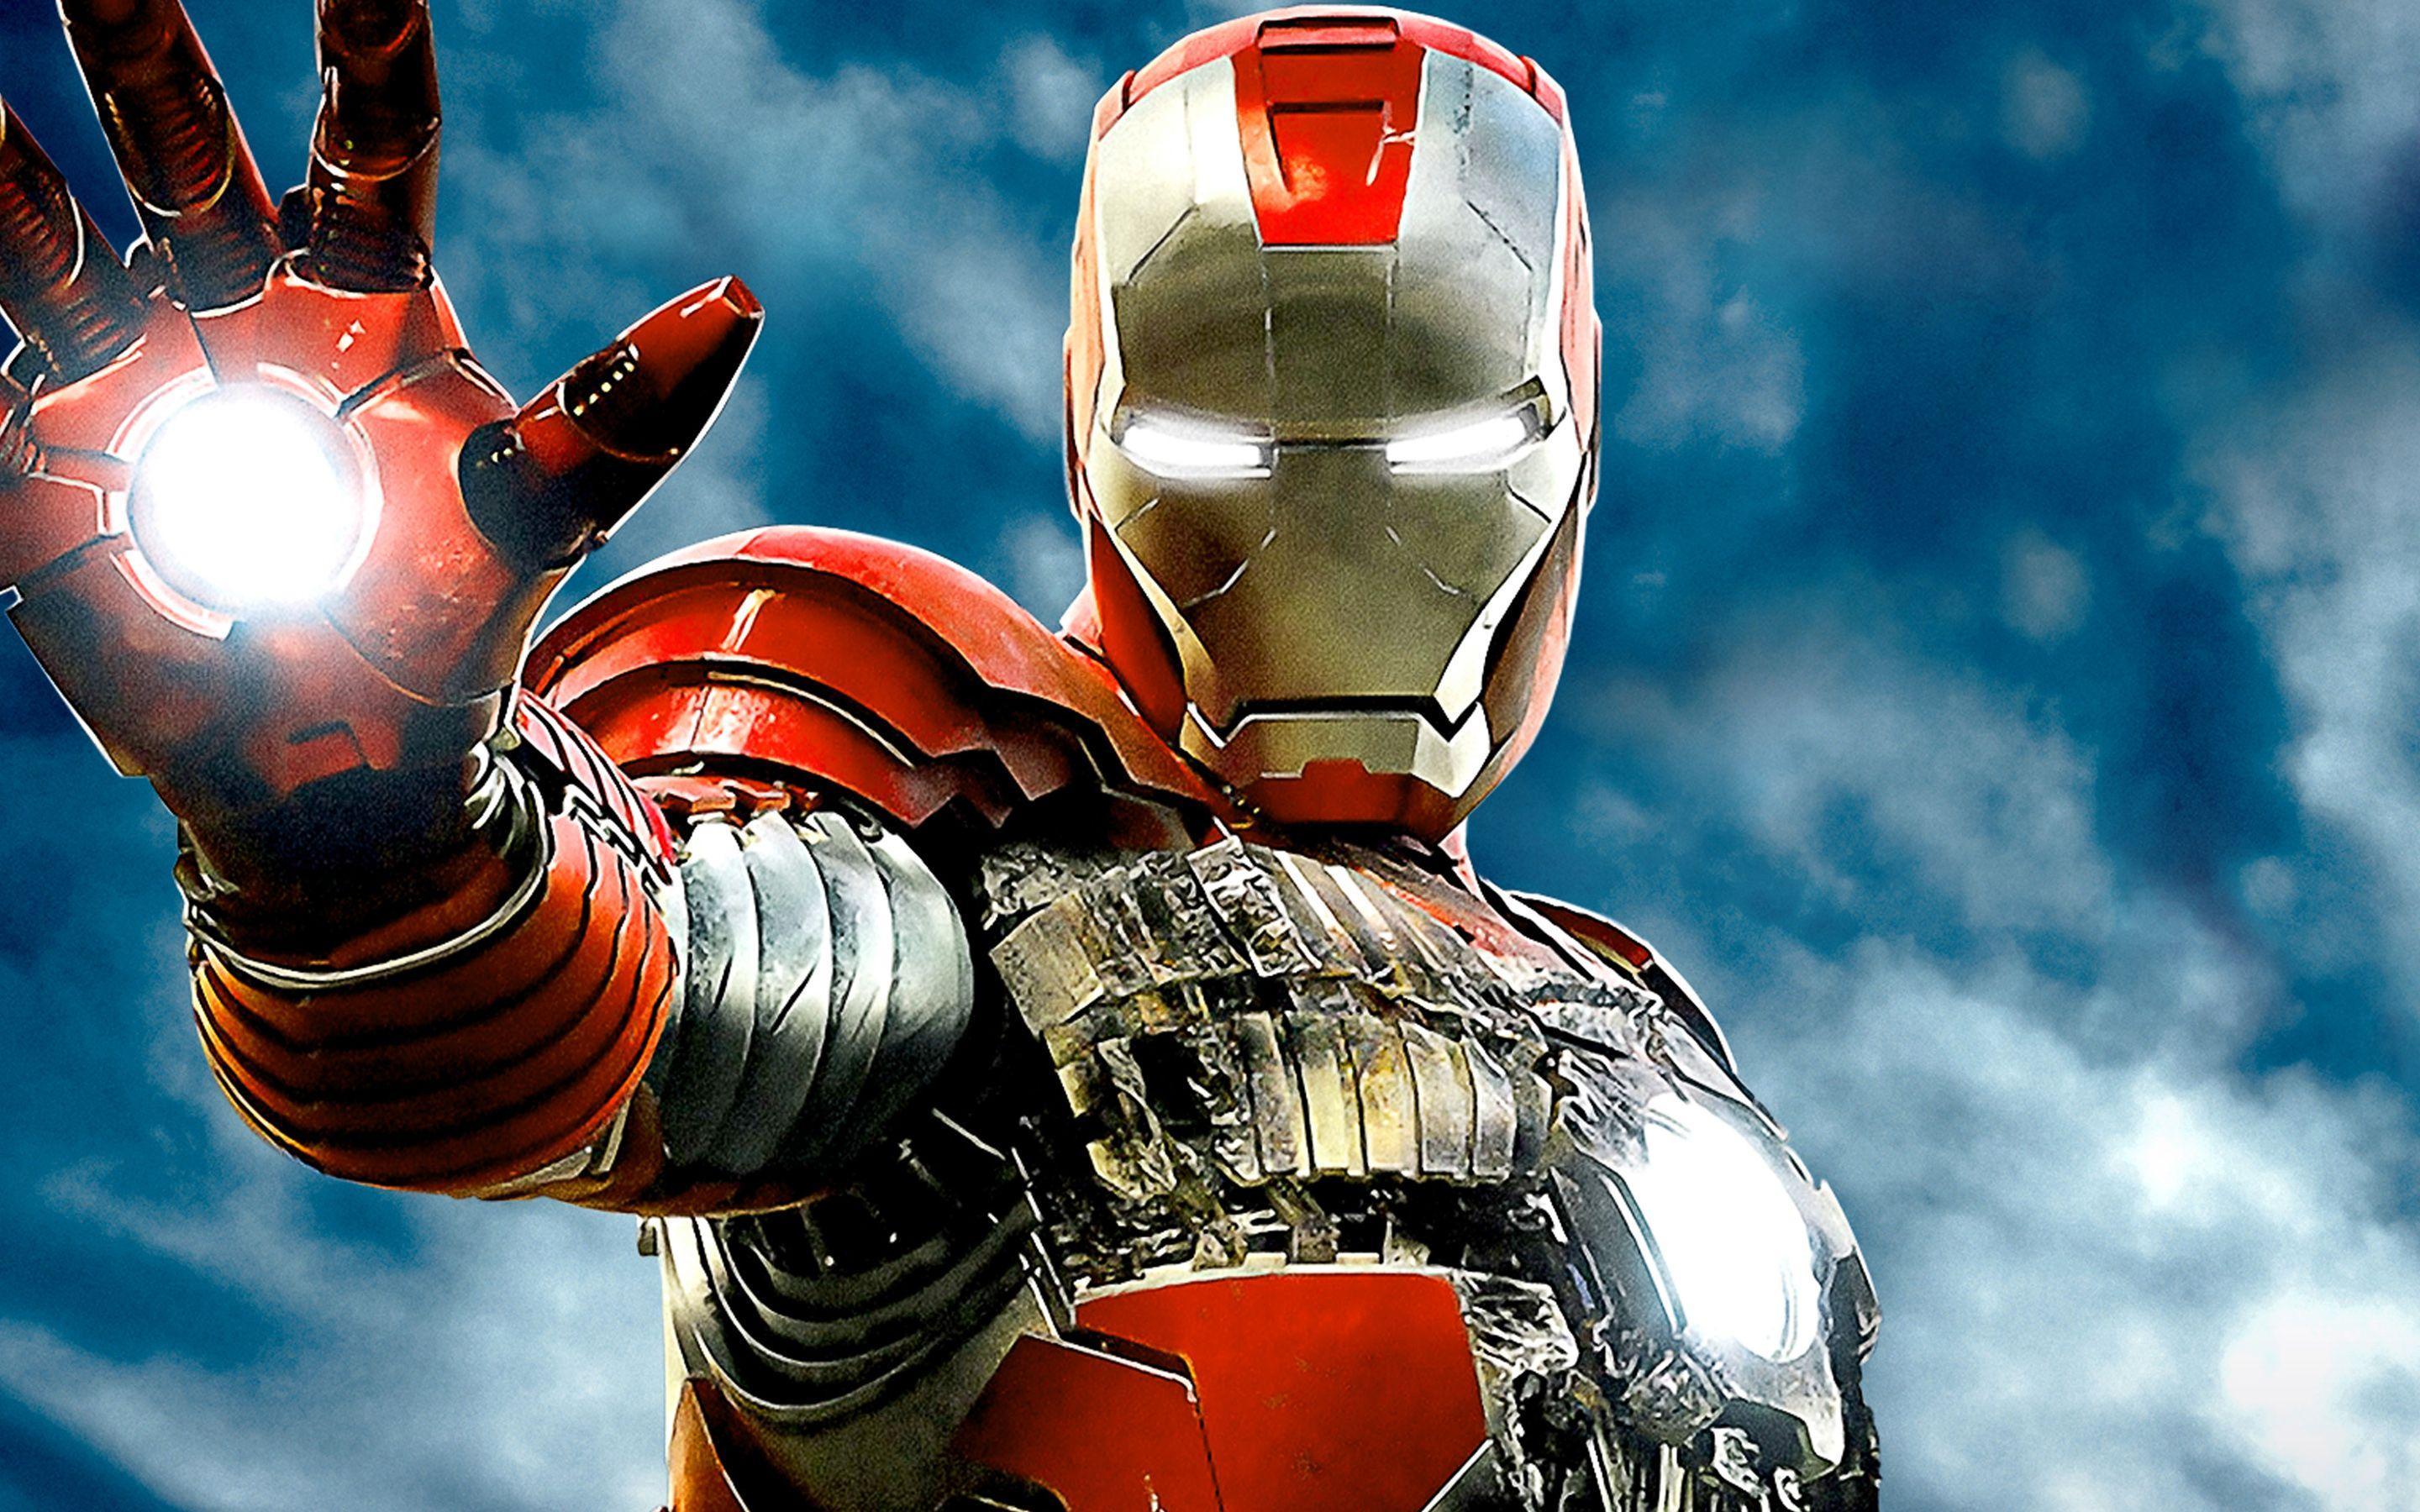 Iron Man 2 IMAX Poster Wallpaper